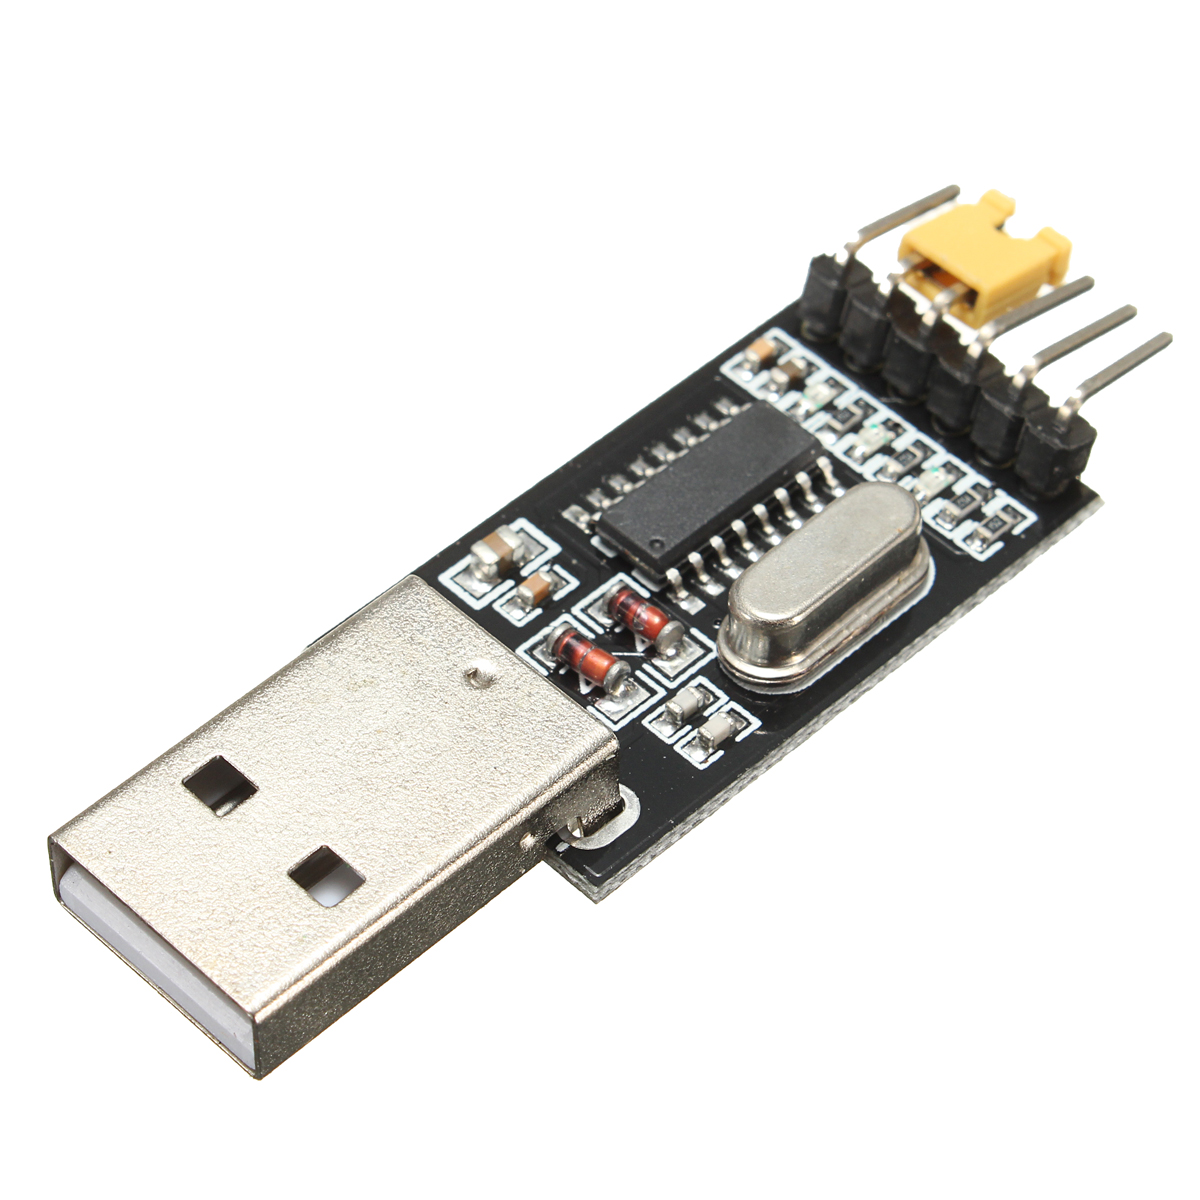 5pcs-33V-5V-USB-to-TTL-Convertor-CH340G-UART-Serial-Adapter-Module-STC-1314966-1